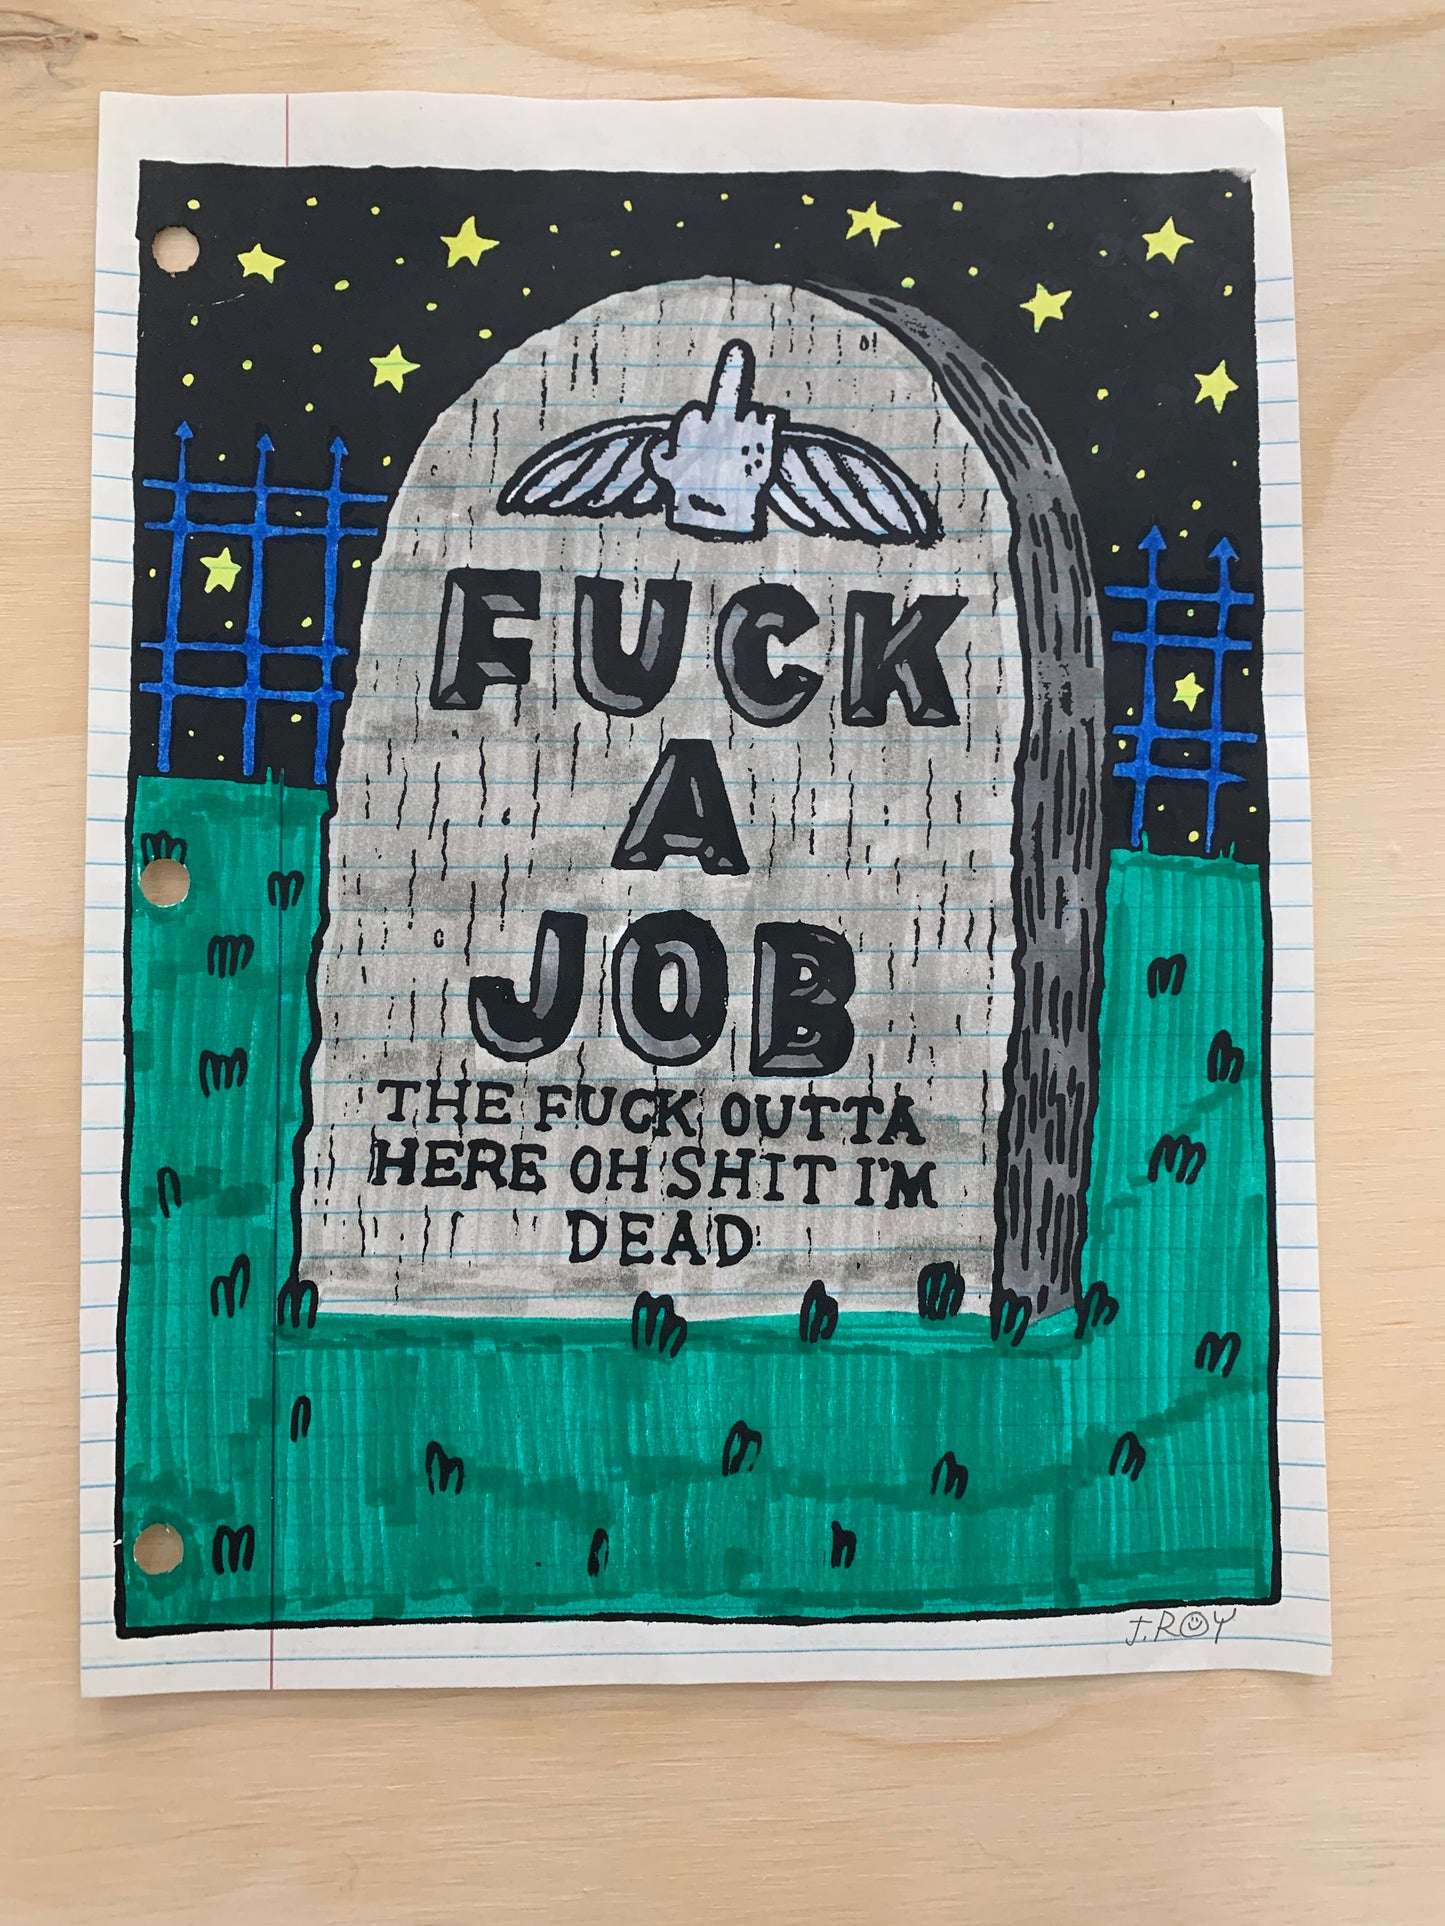 Fuck a Job... by Jason Roy